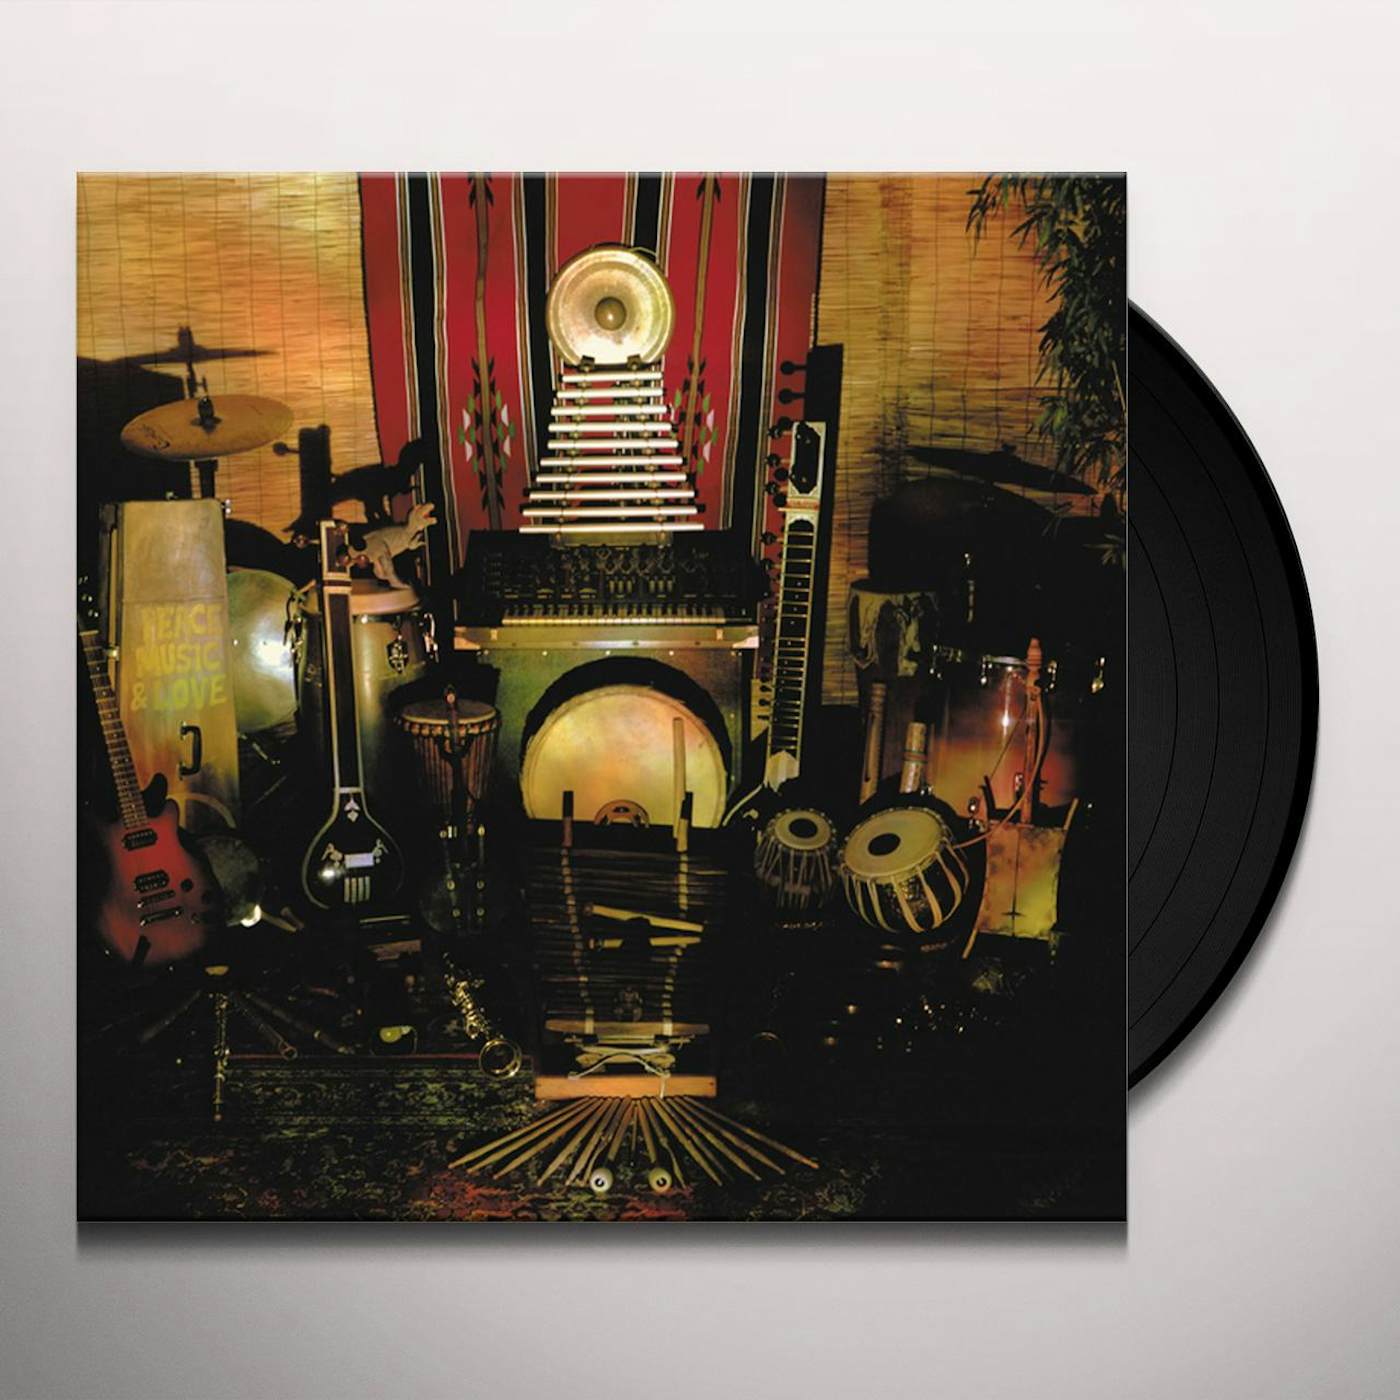 Al Doum & The Faryds Cosmic Love Vinyl Record